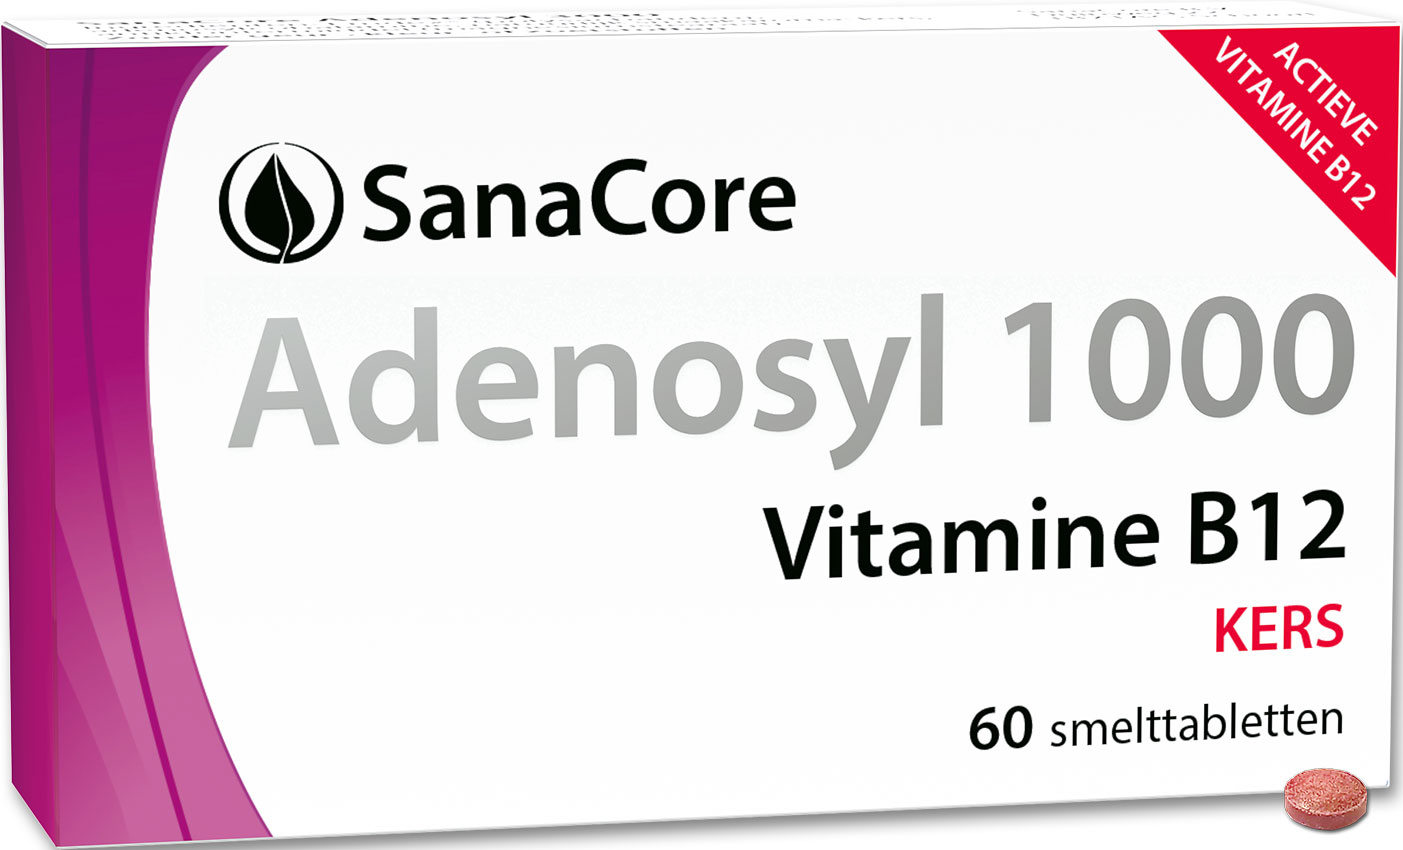 SanaCore Adenosyl 1000 ZONDER FOLIUMZUUR